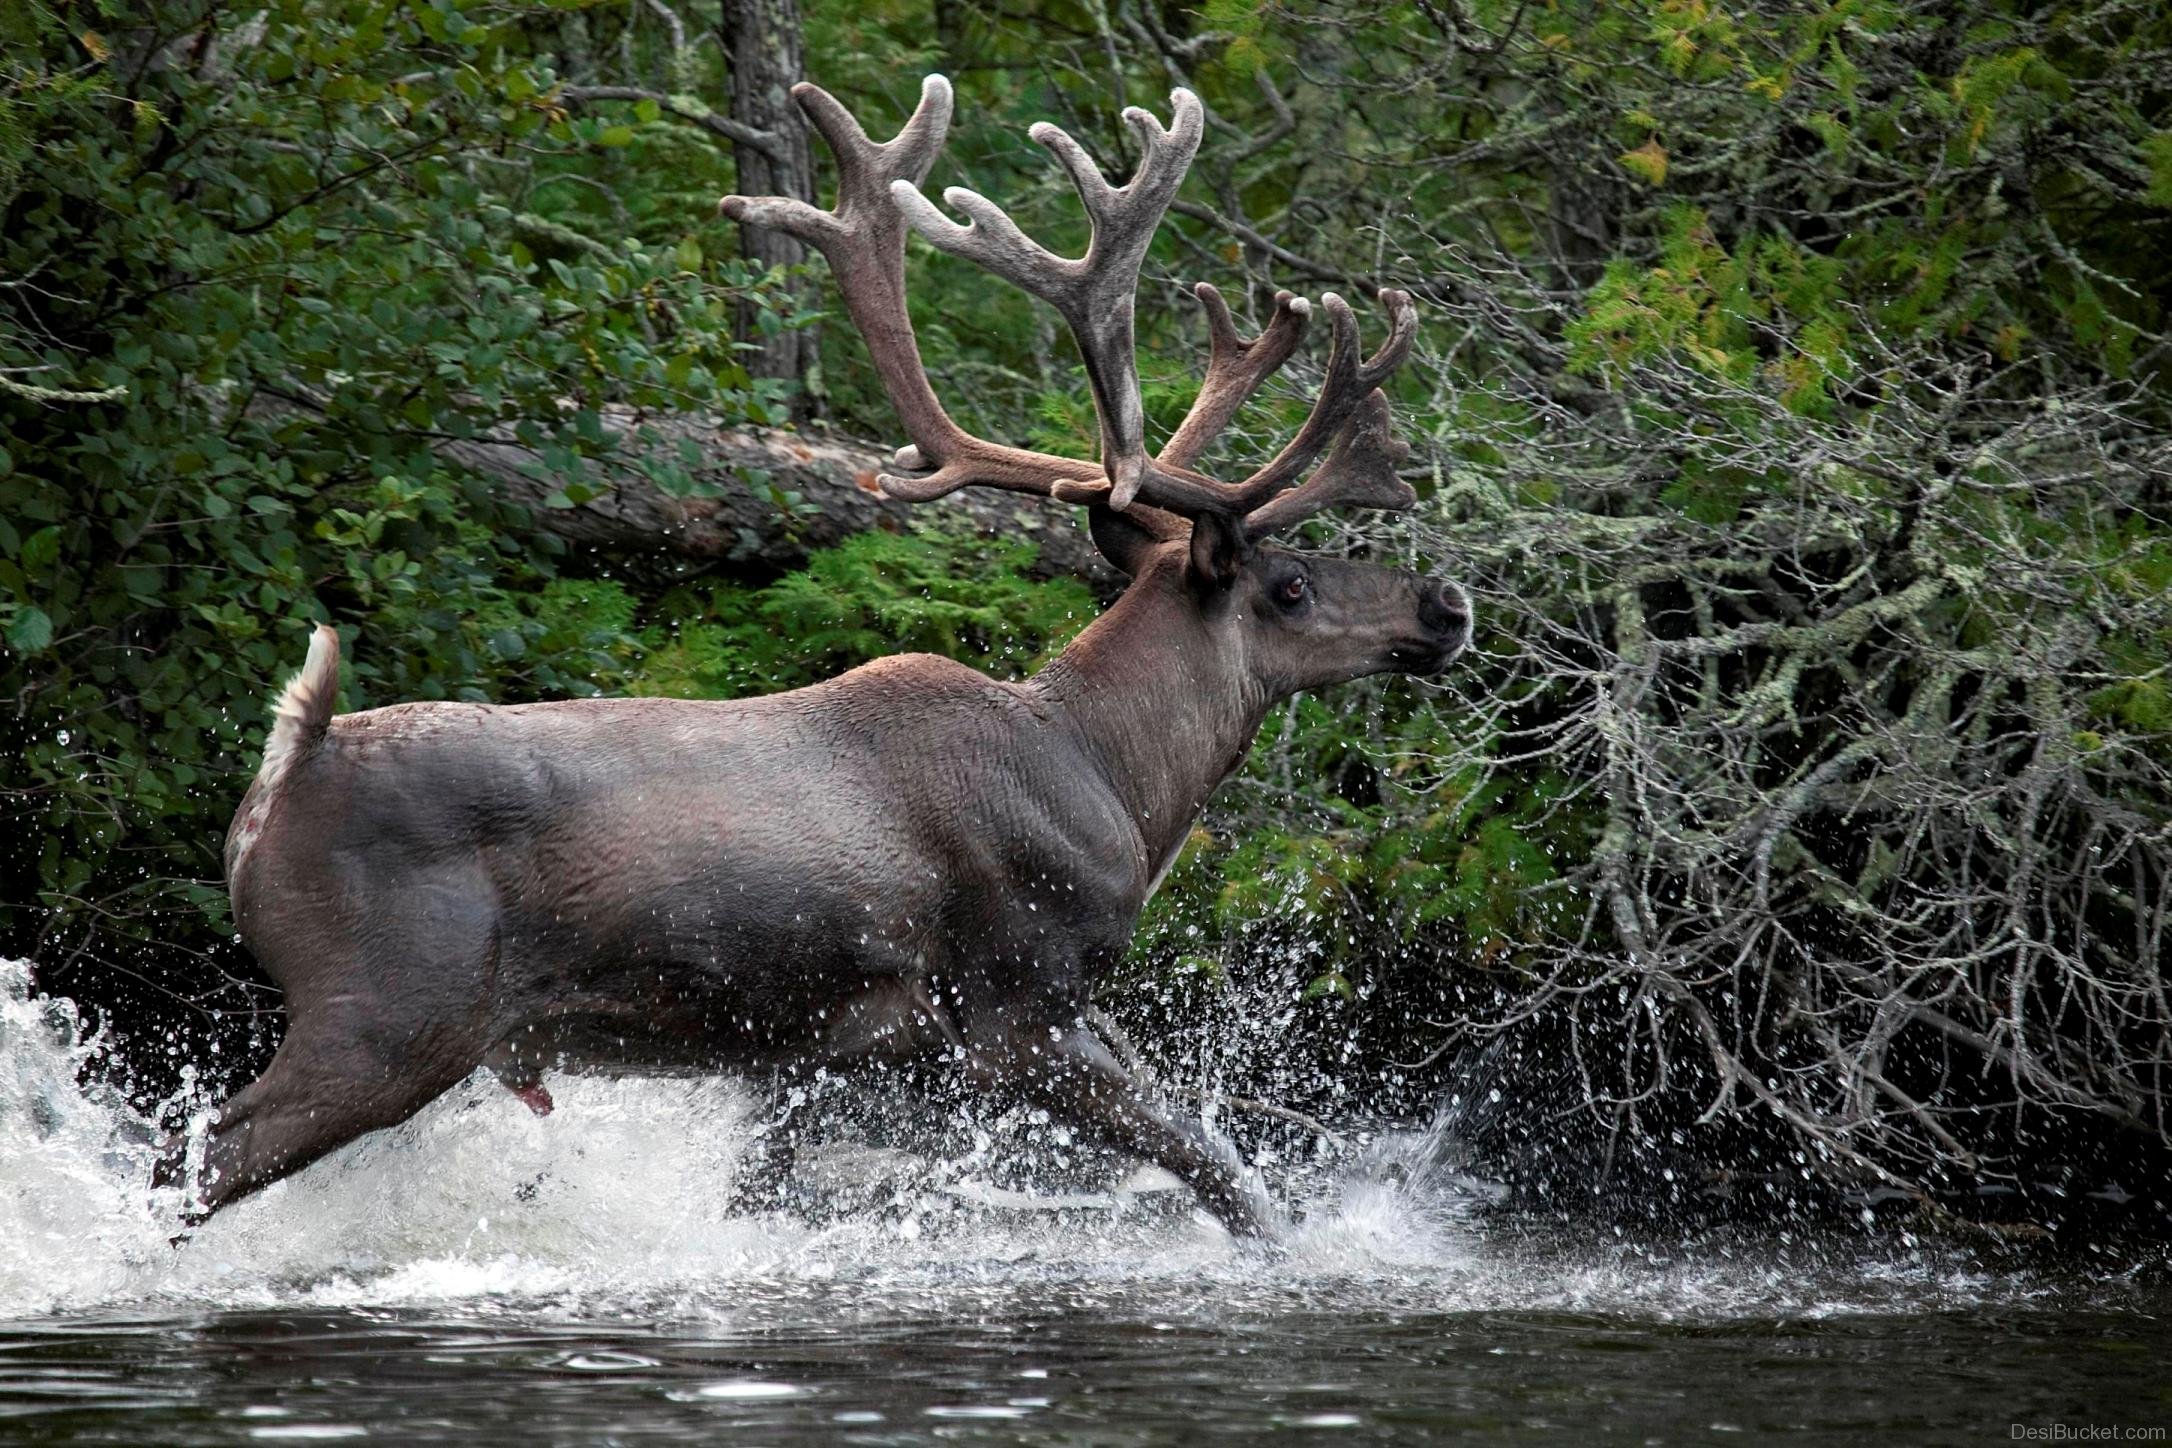 Caribou Running in Water | DesiBucket.com